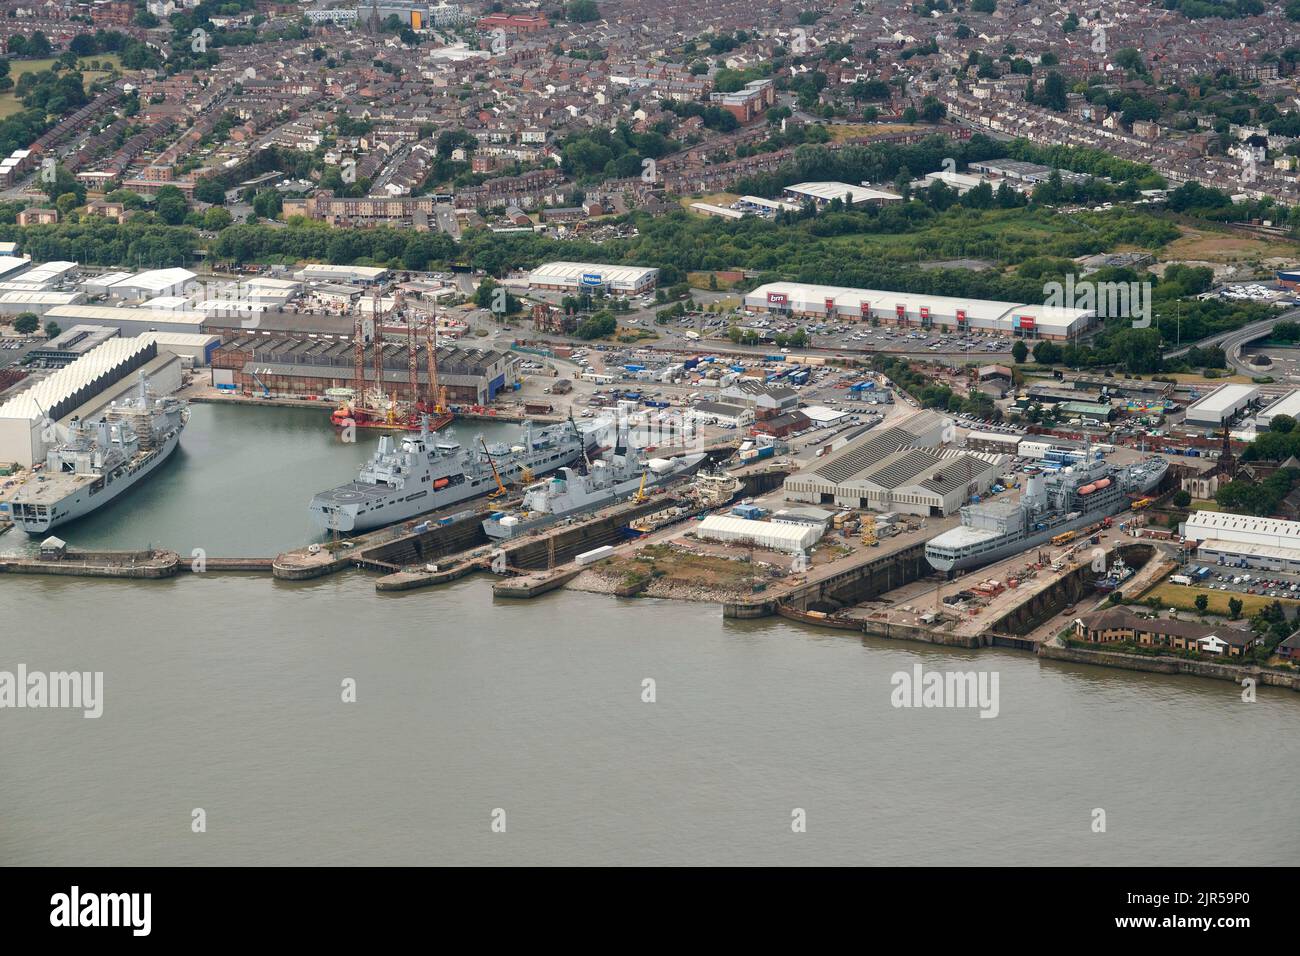 Photographie aérienne du chantier naval Cammell Laird, Birkenhead, Merseyside, Liverpool, nord-ouest de l'Angleterre Banque D'Images